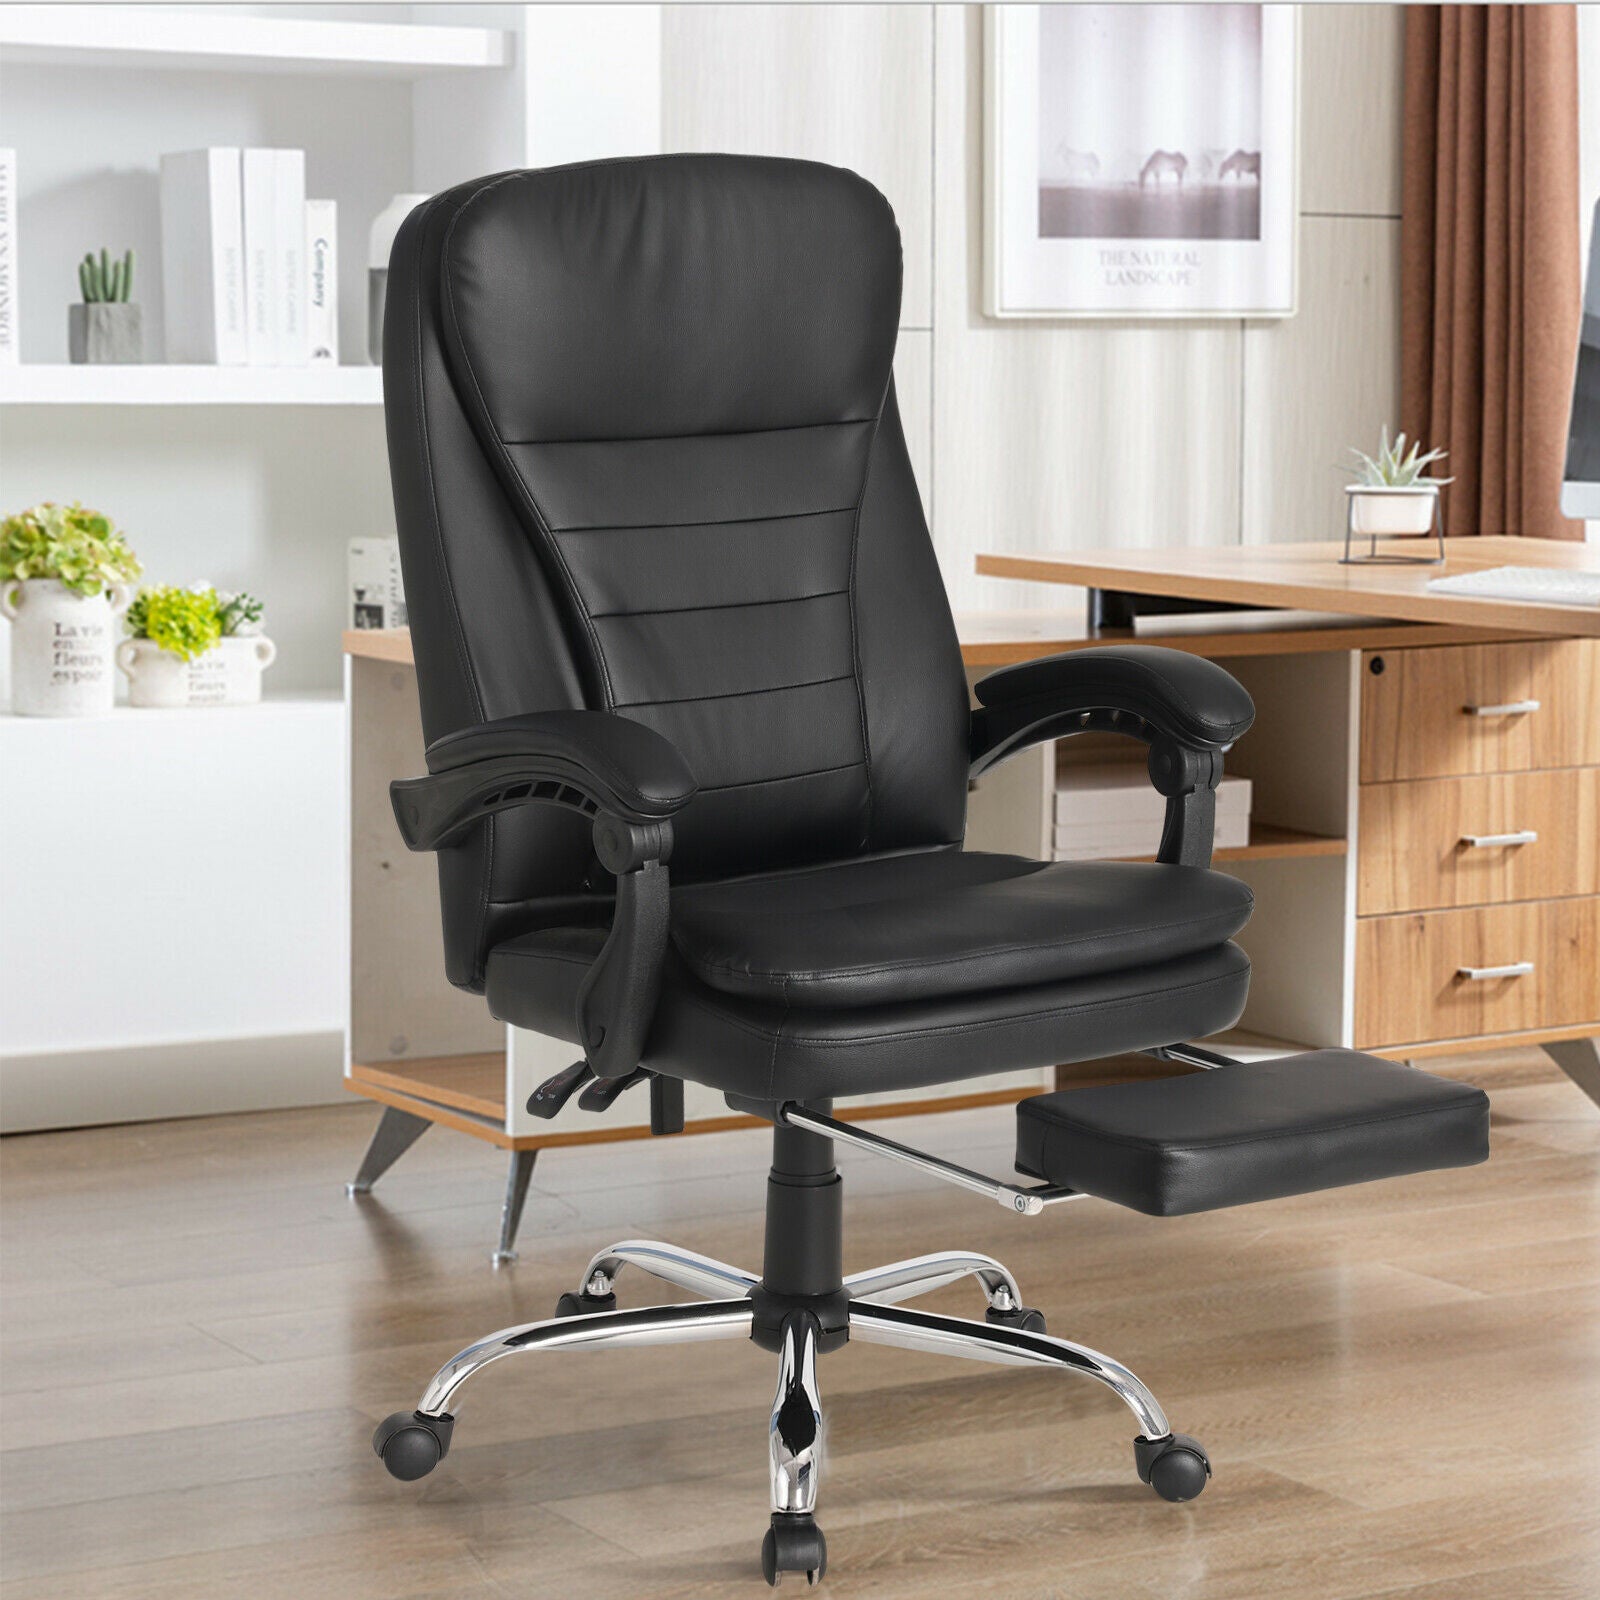 XTASK - Ergonomic Office Chair